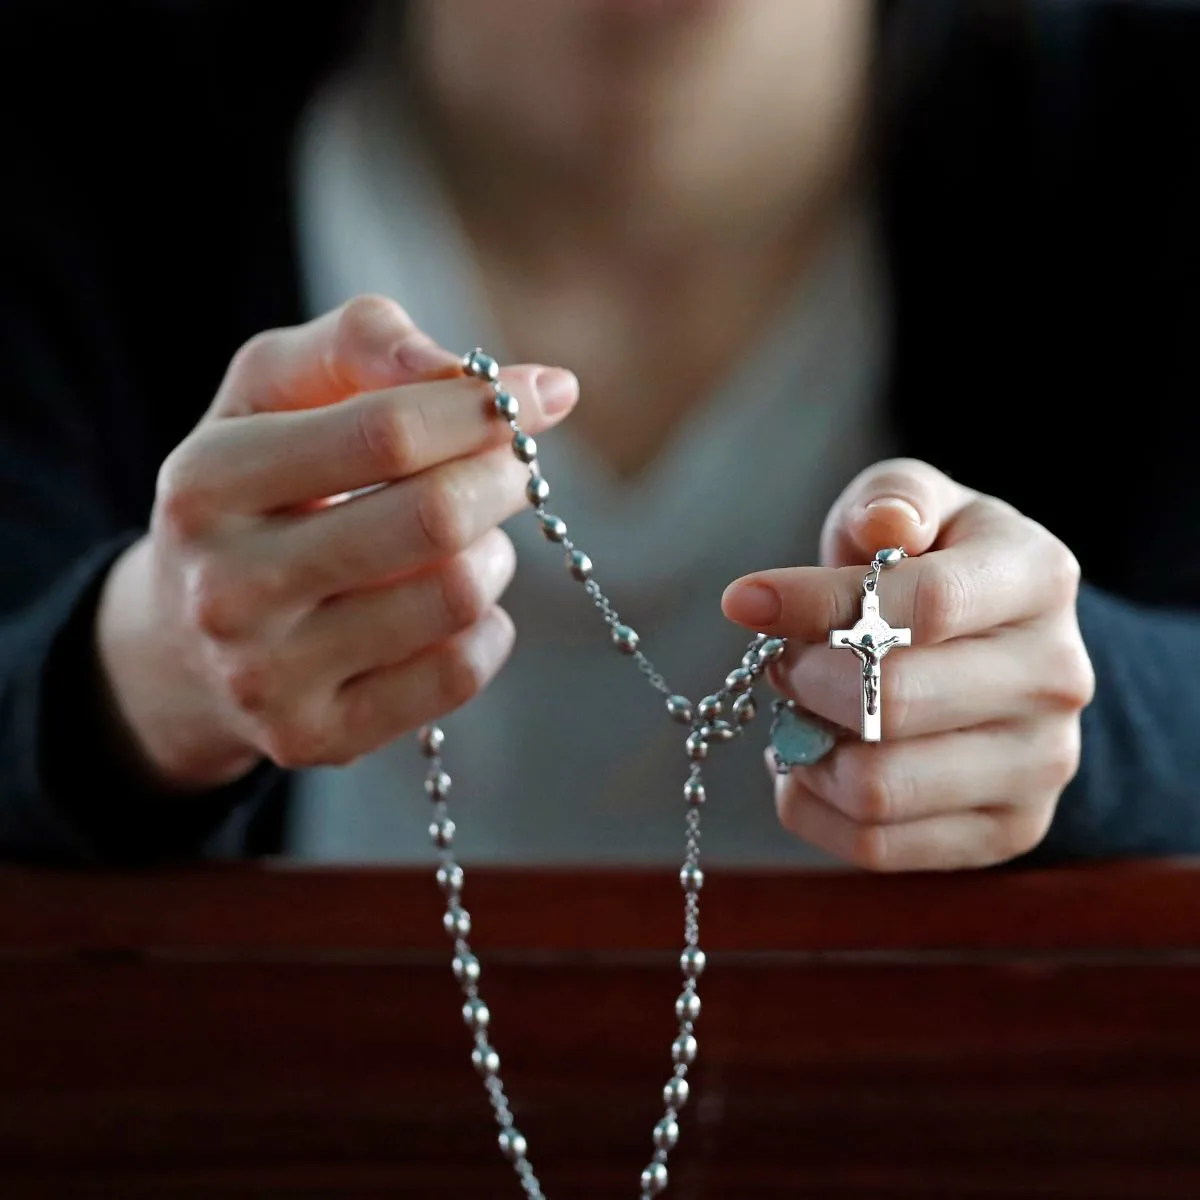 spiritual meaning of broken rosary